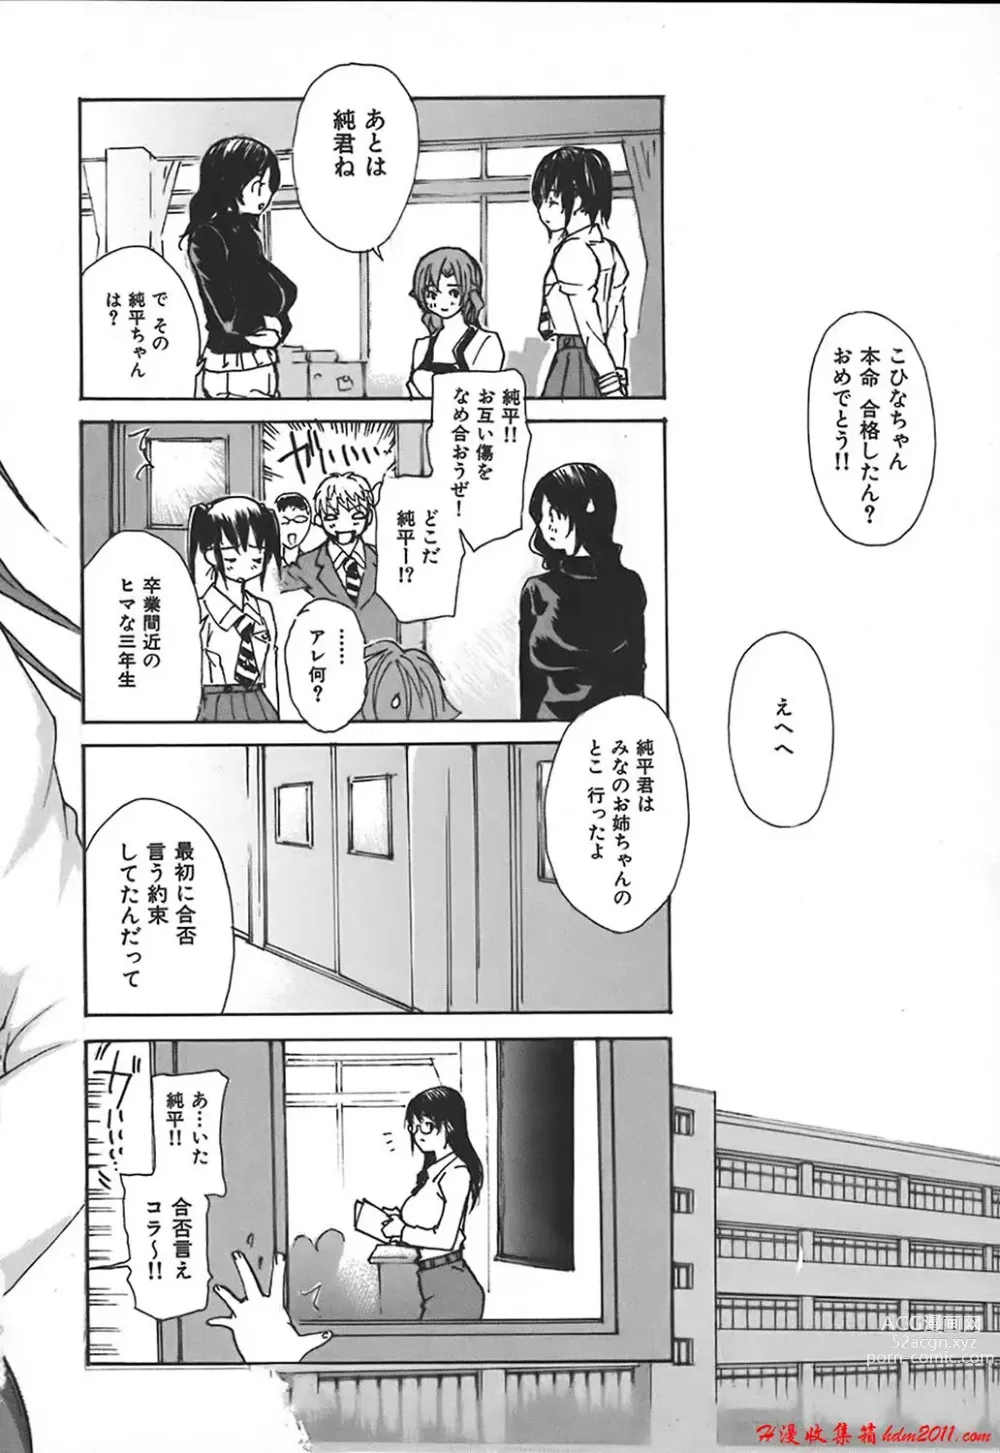 Page 849 of manga [MGジョー][Breastfeeding ~Hahachichi~] (Breastfeeding)